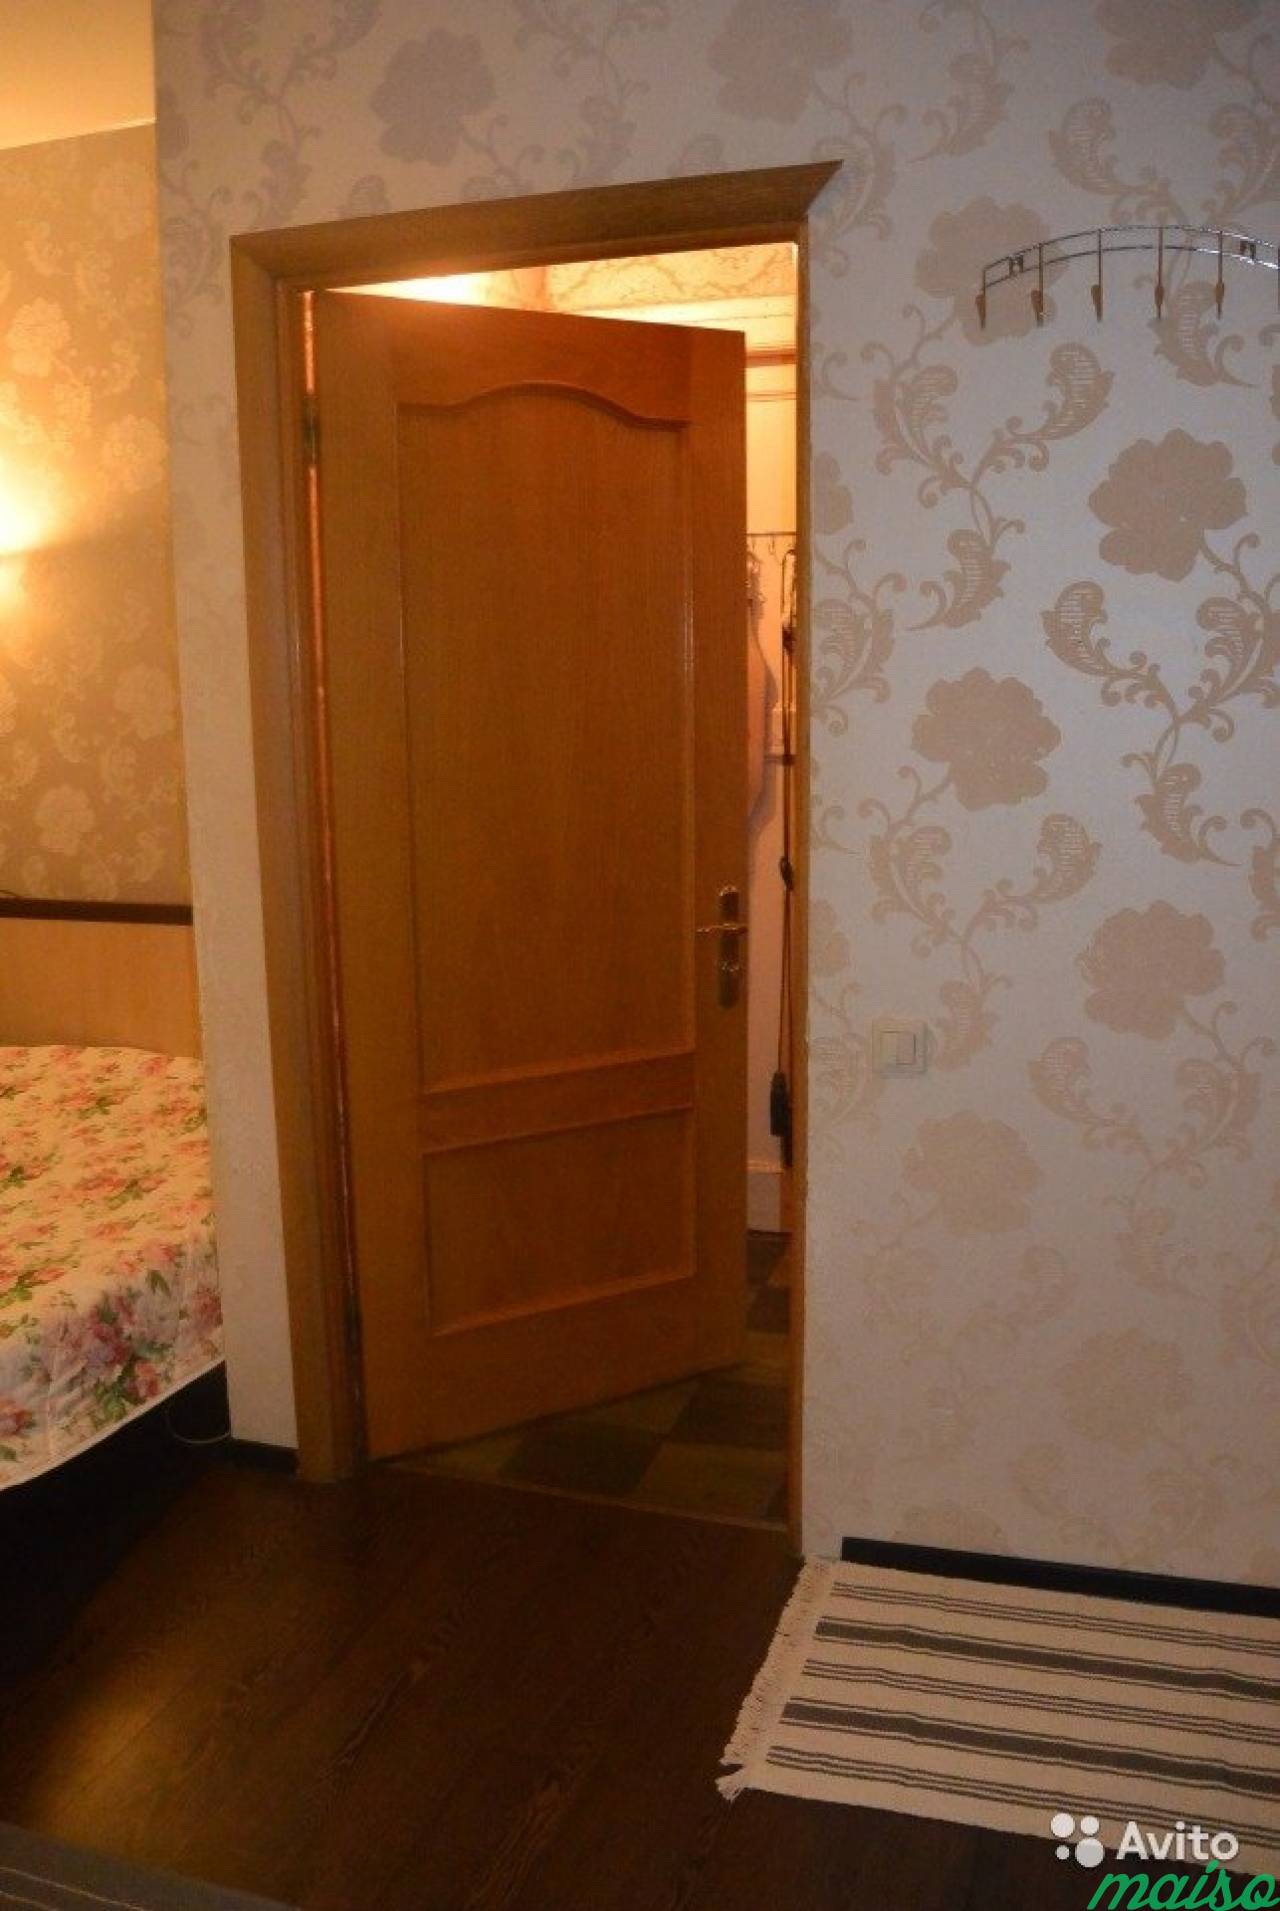 Комната 16.2 м² в 4-к, 1/3 эт. в Санкт-Петербурге. Фото 5